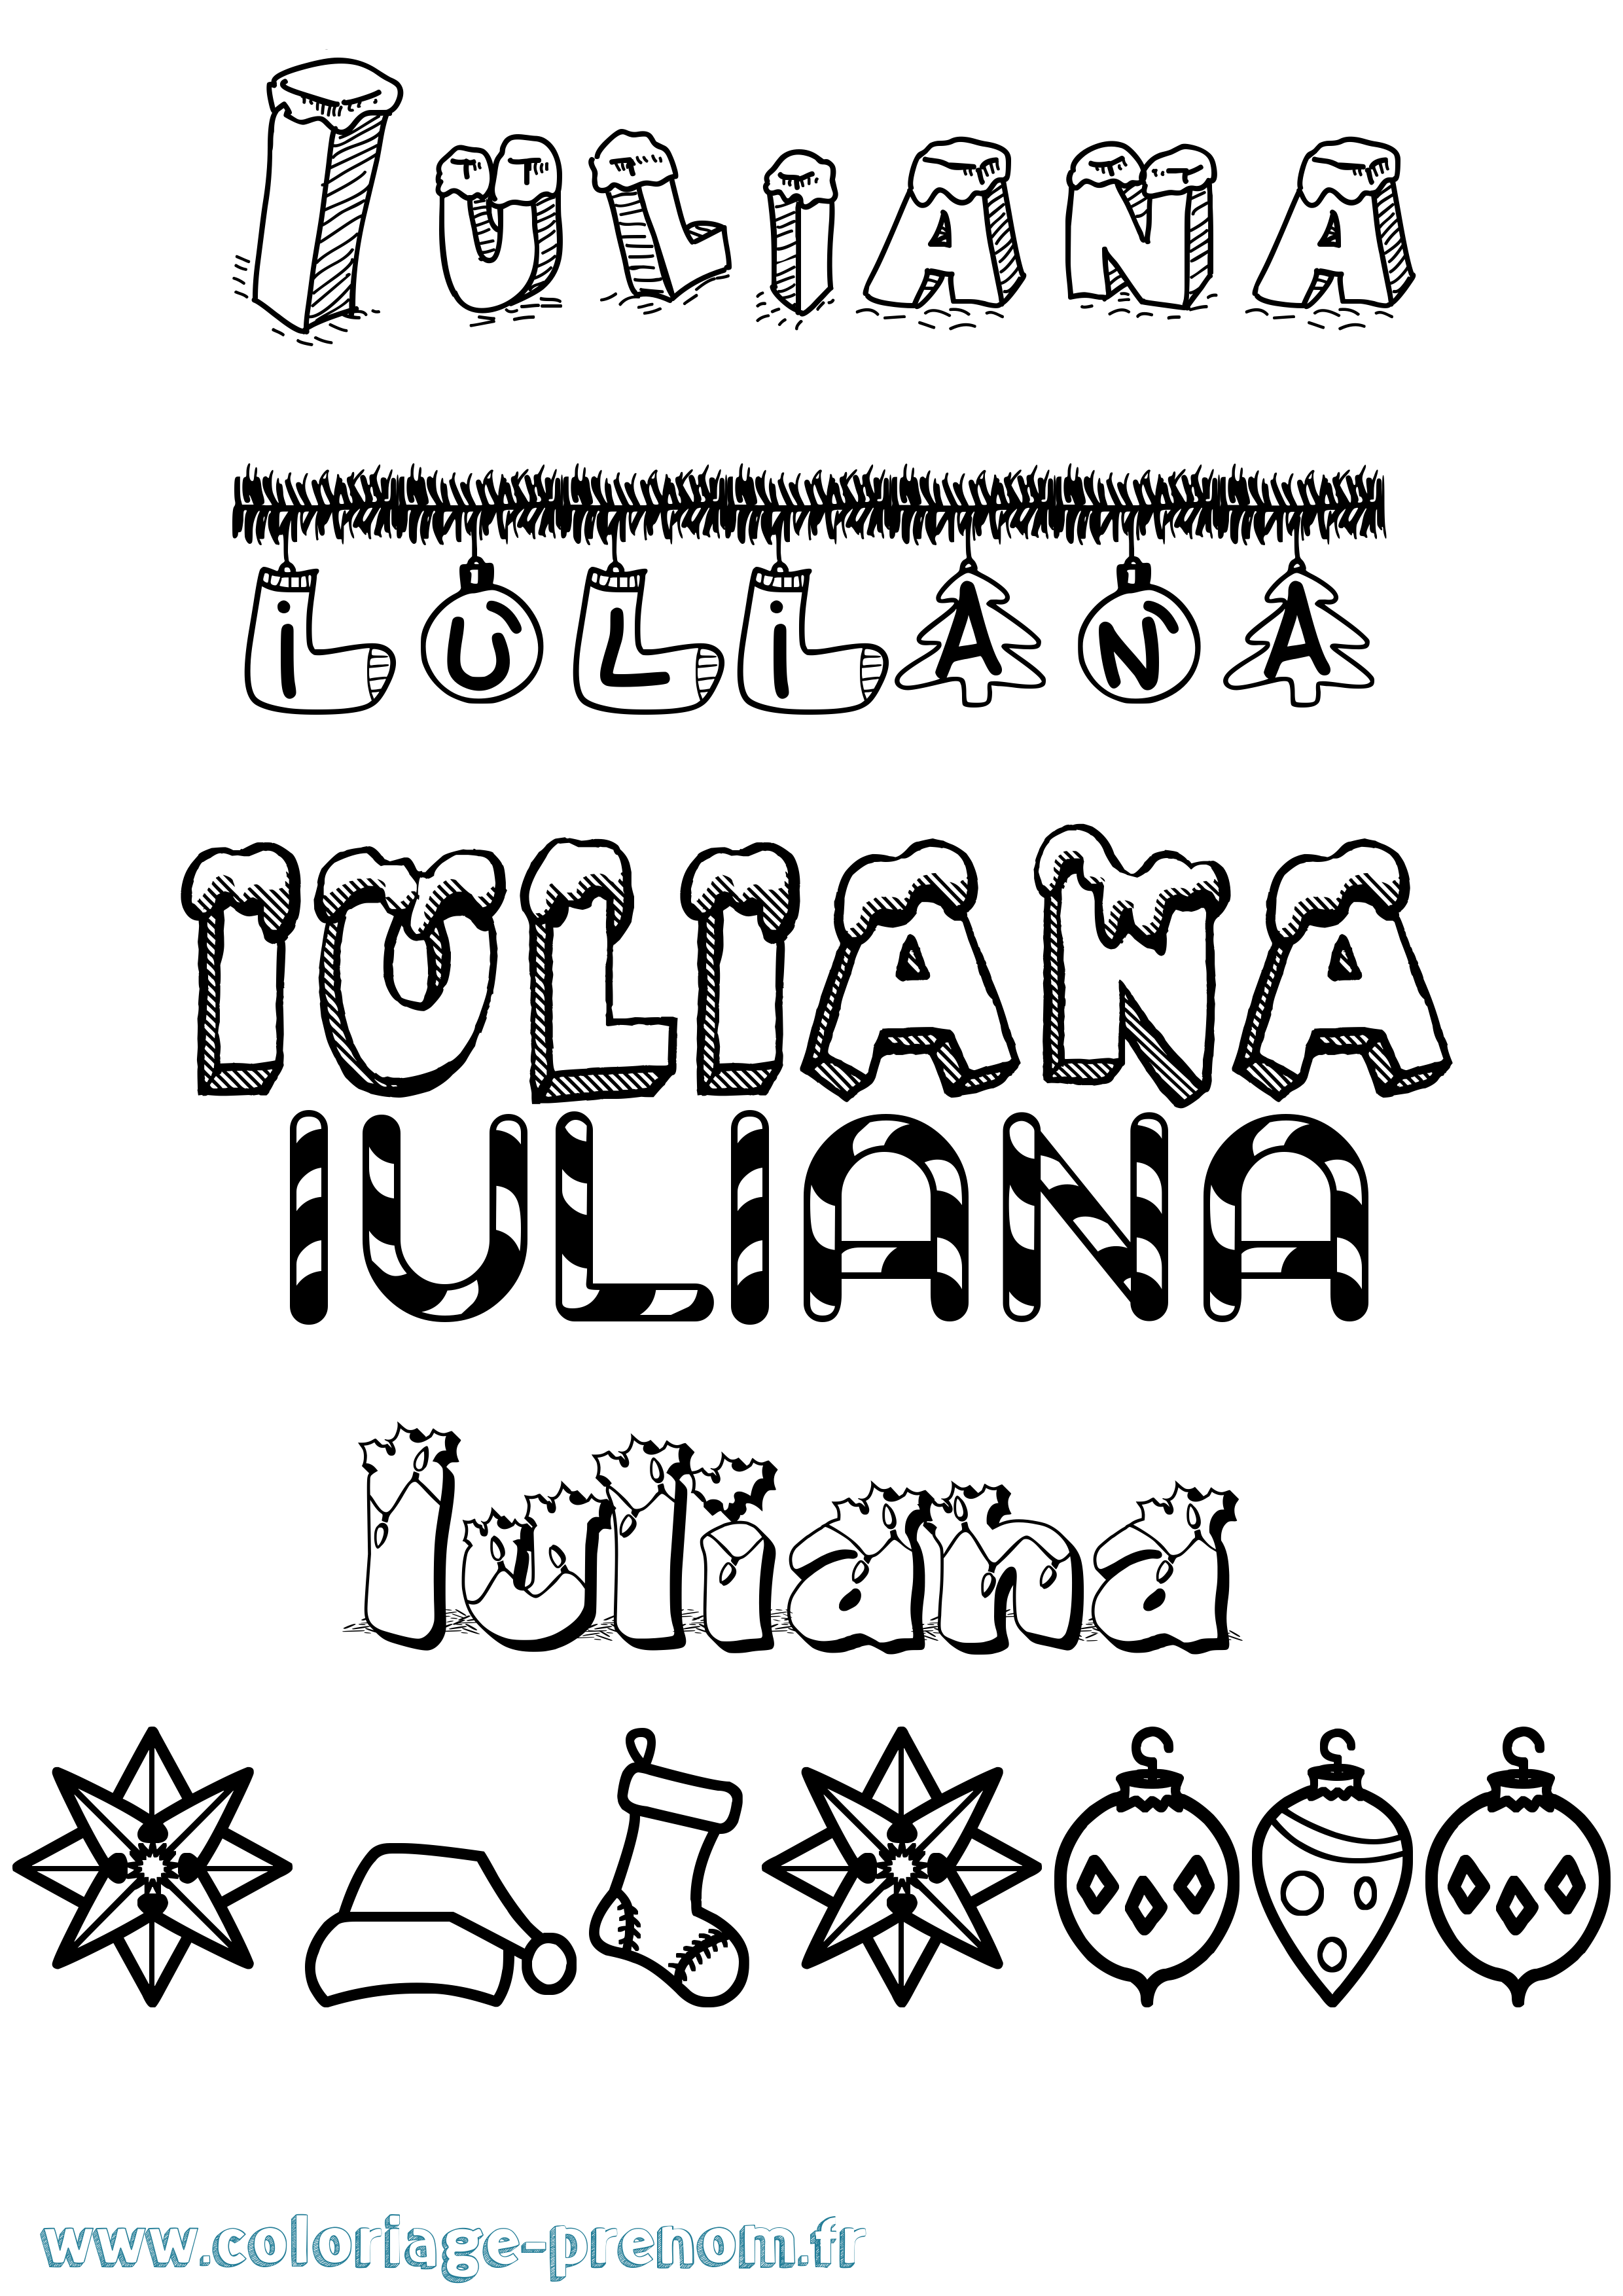 Coloriage prénom Iuliana Noël